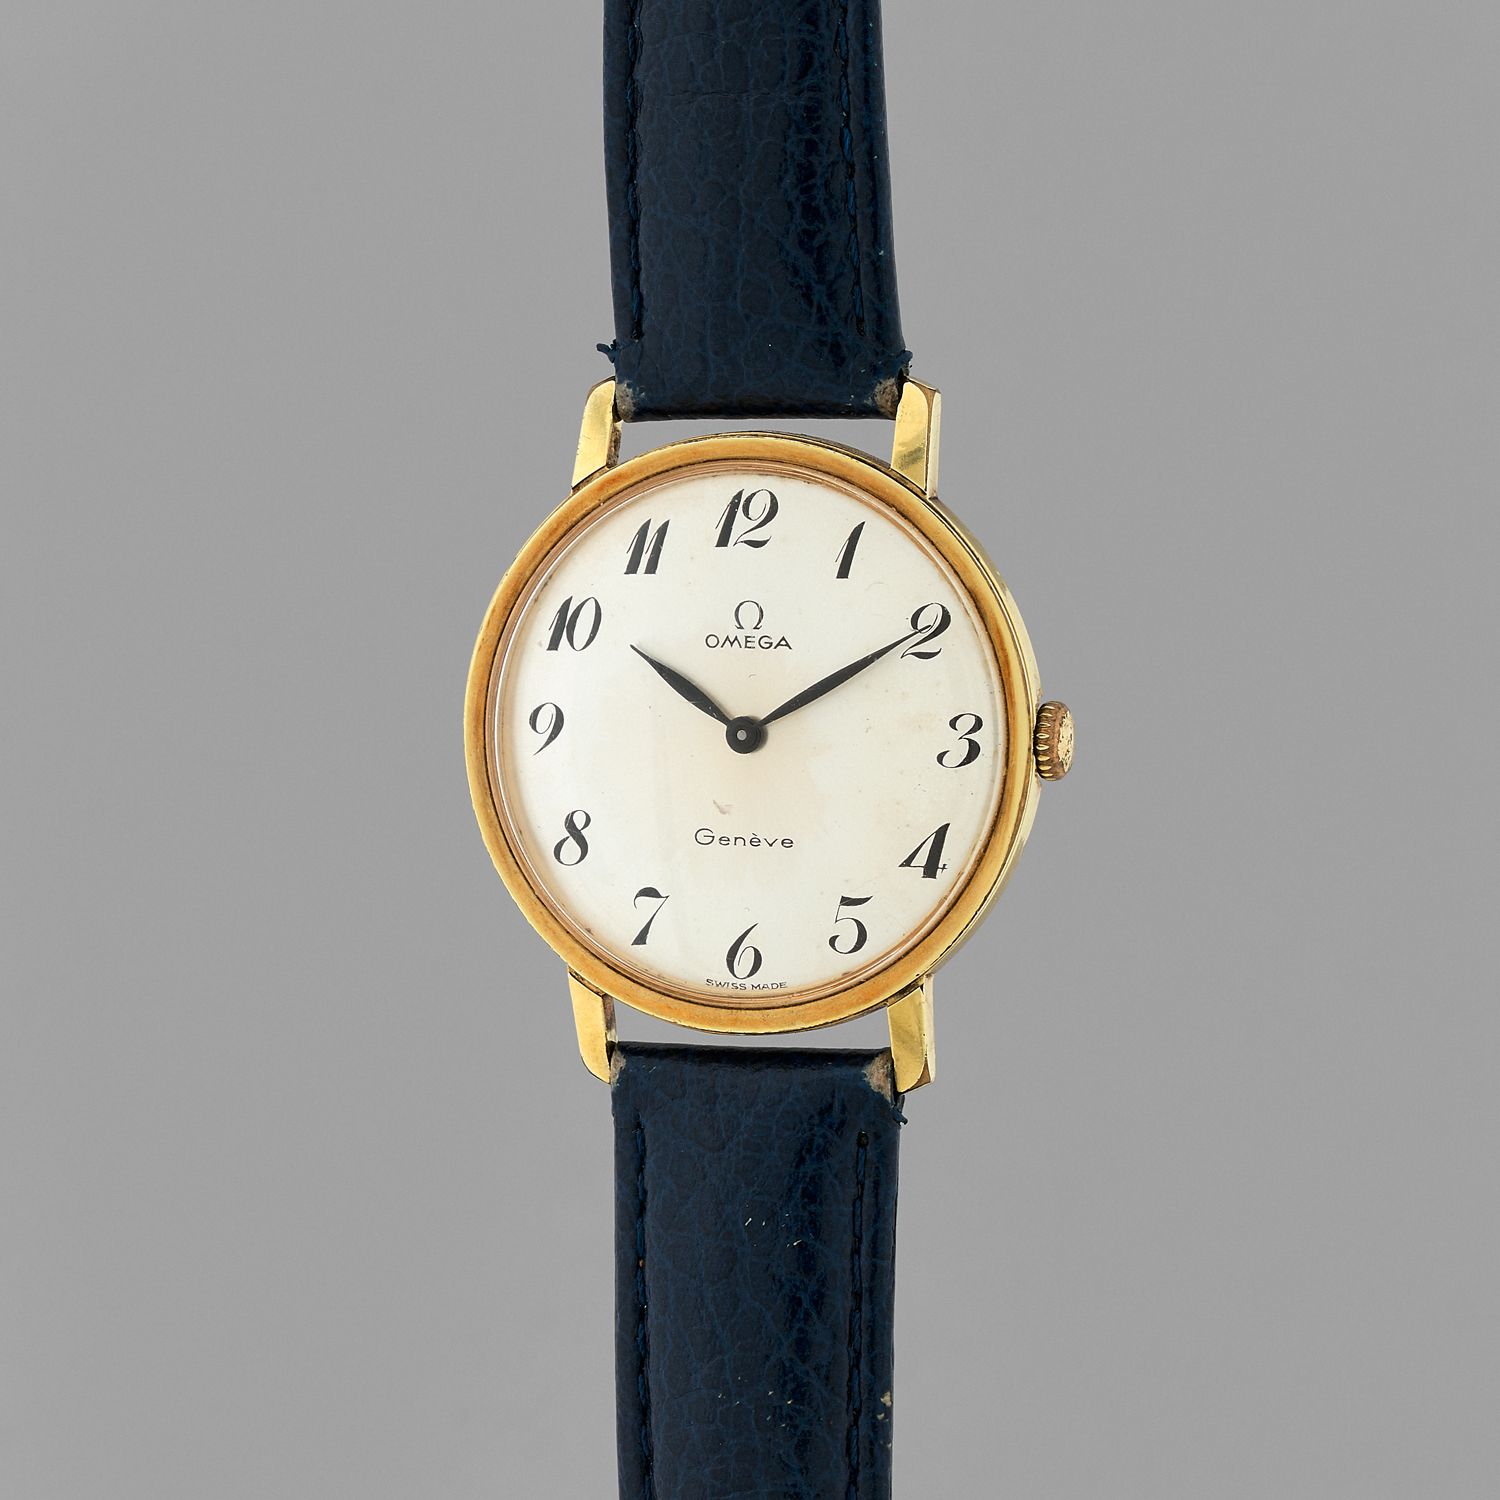 Null OMEGA
Genf.
Um: 1960.
Vergoldete Armbanduhr. Rundes Gehäuse, goldfarbenes Z&hellip;